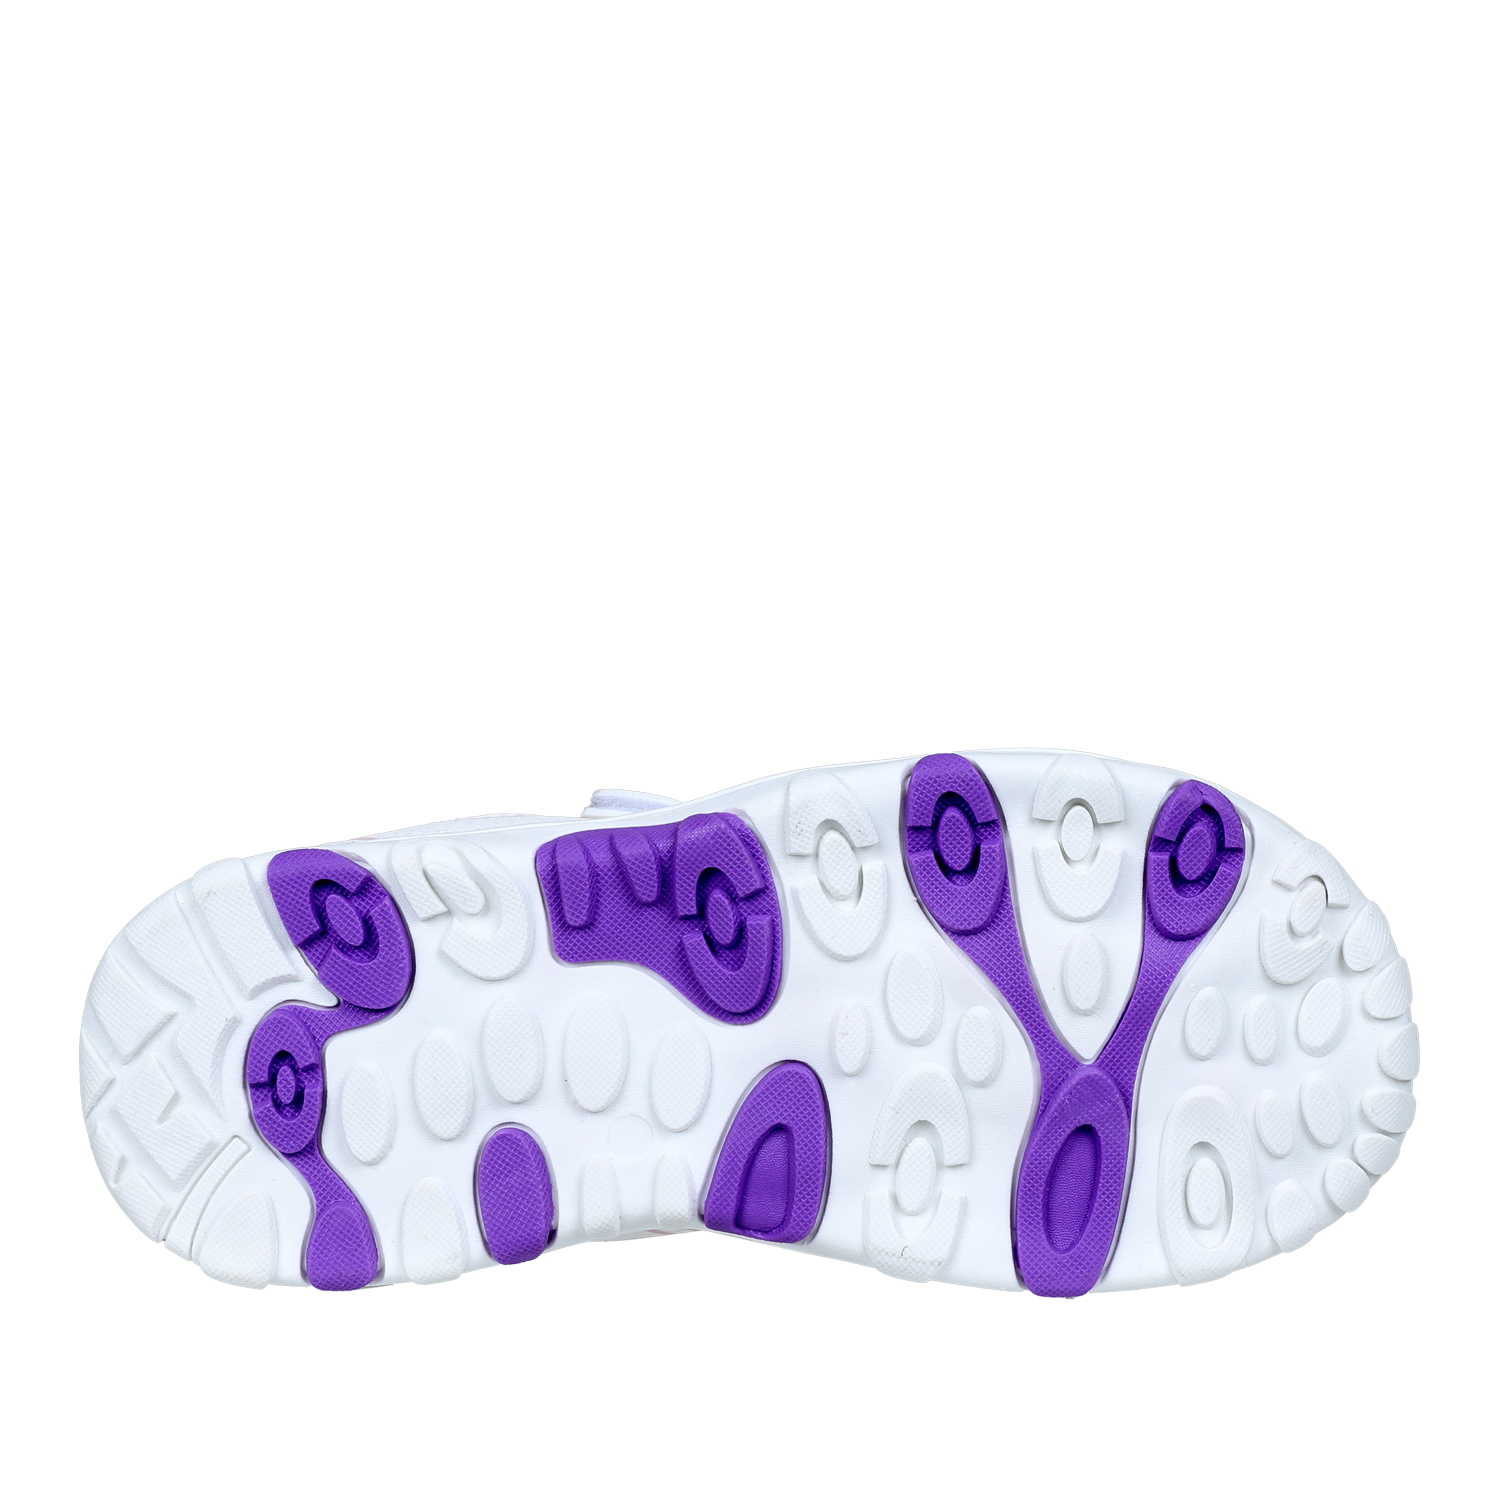 Сандалии детские Toread Children's sandals White/purple